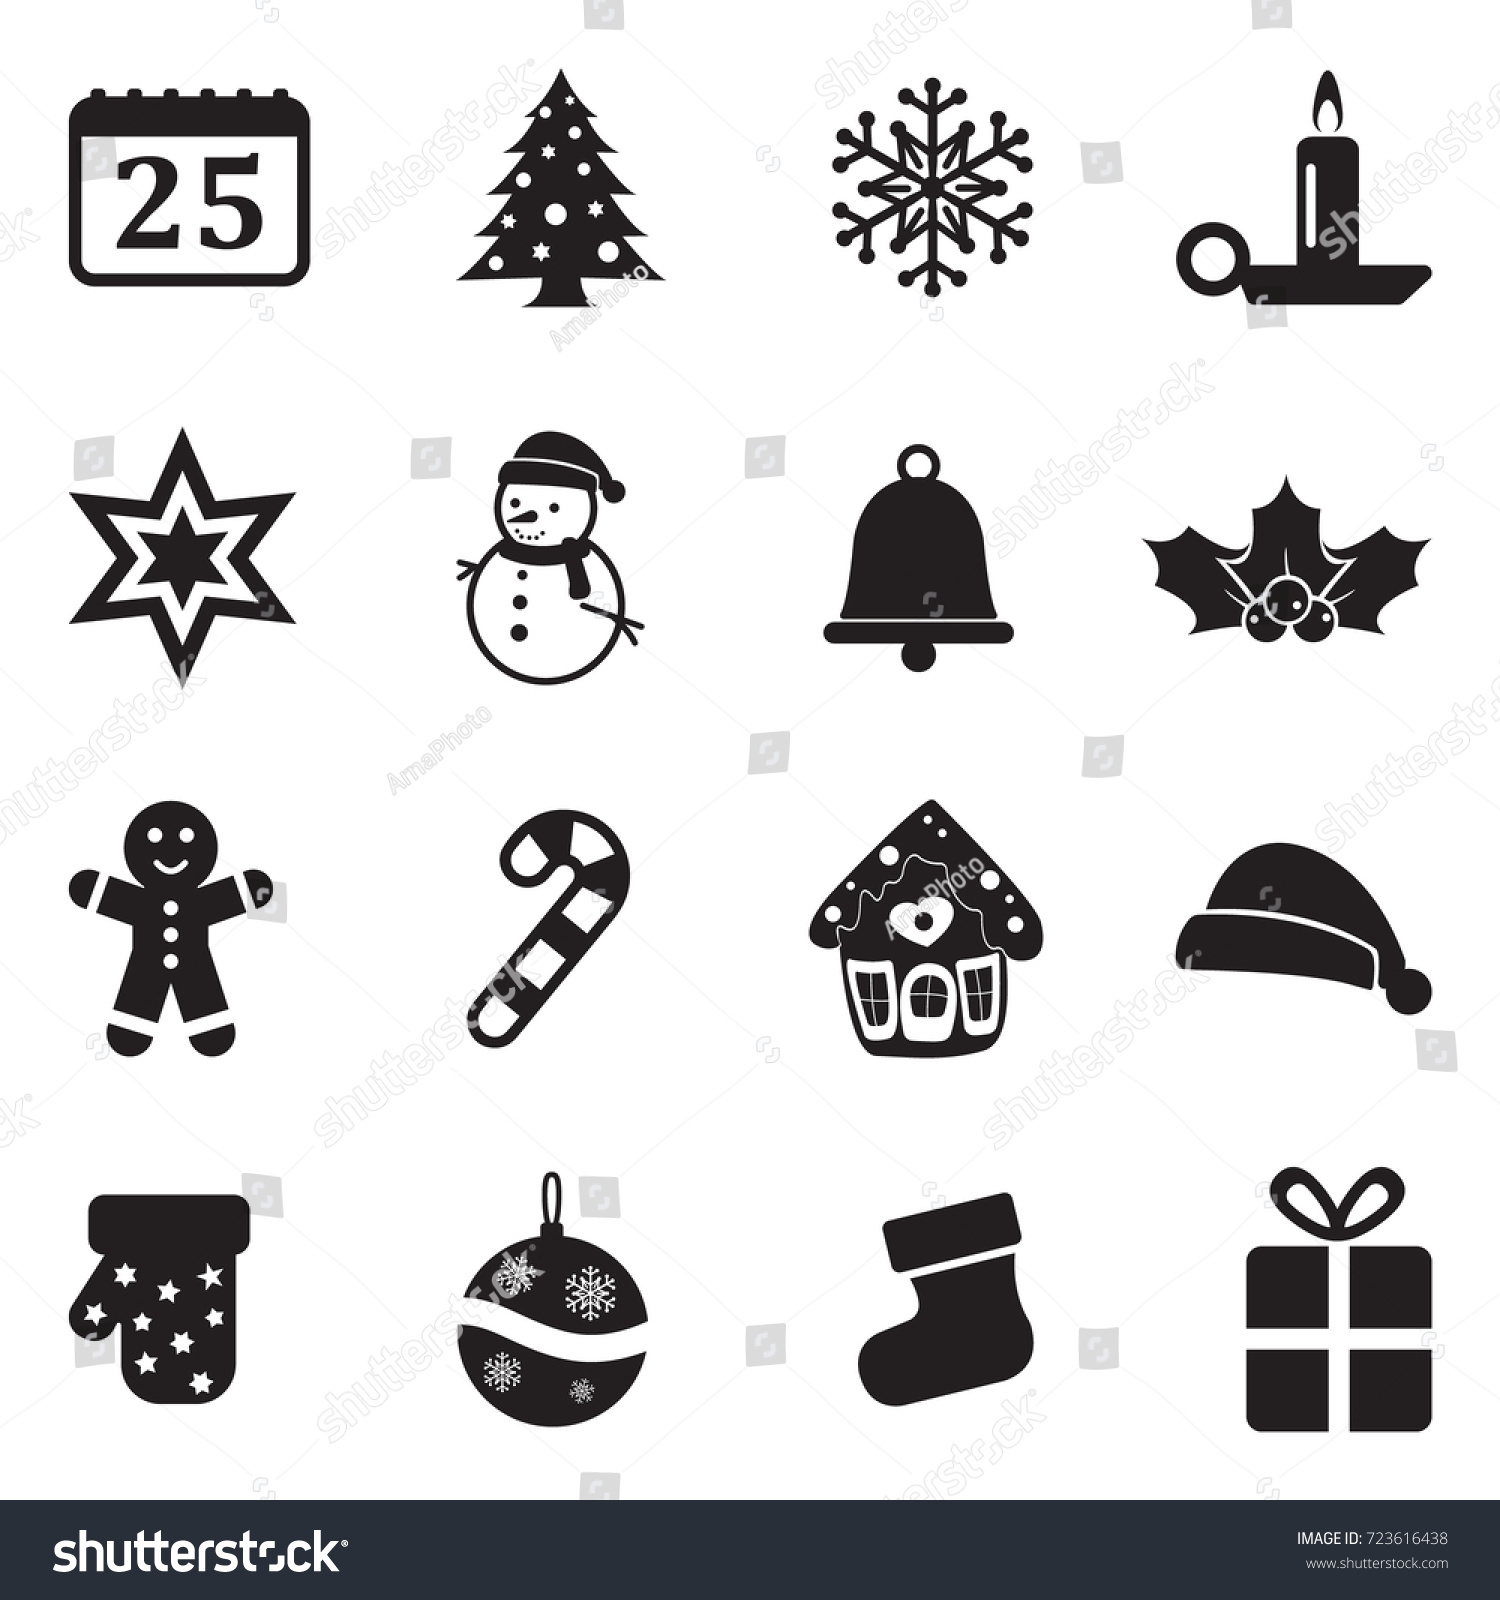 Christmas Icons Black Flat Design Vector Stock Vector (Royalty Free ...